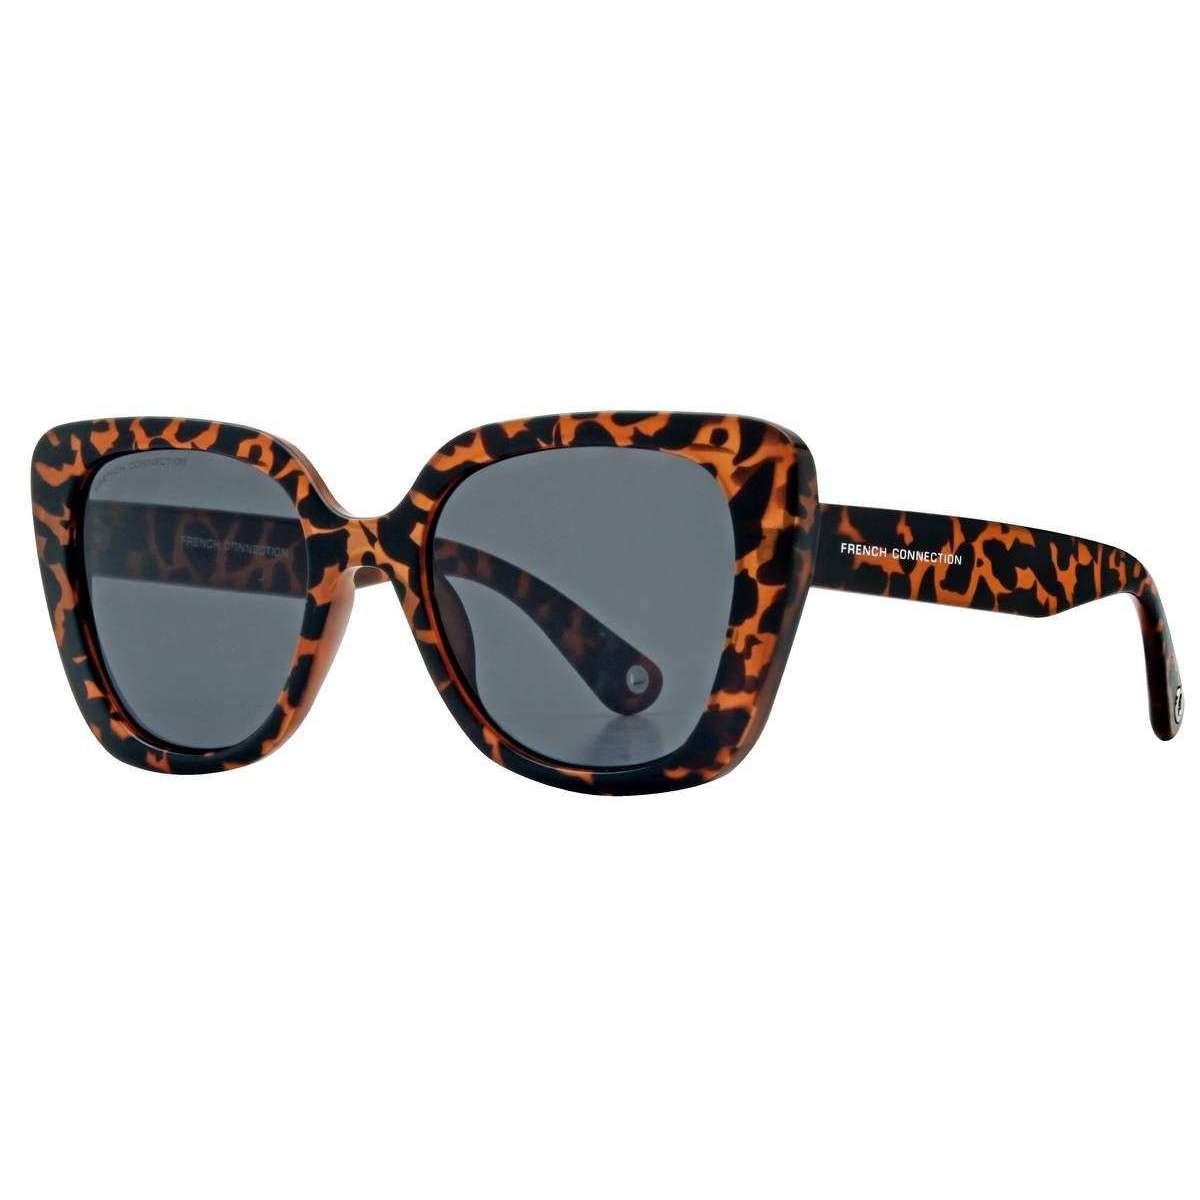 French Connection Glam Cat Eye Sunglasses - Classic Tortoise Shell/Smoke Grey